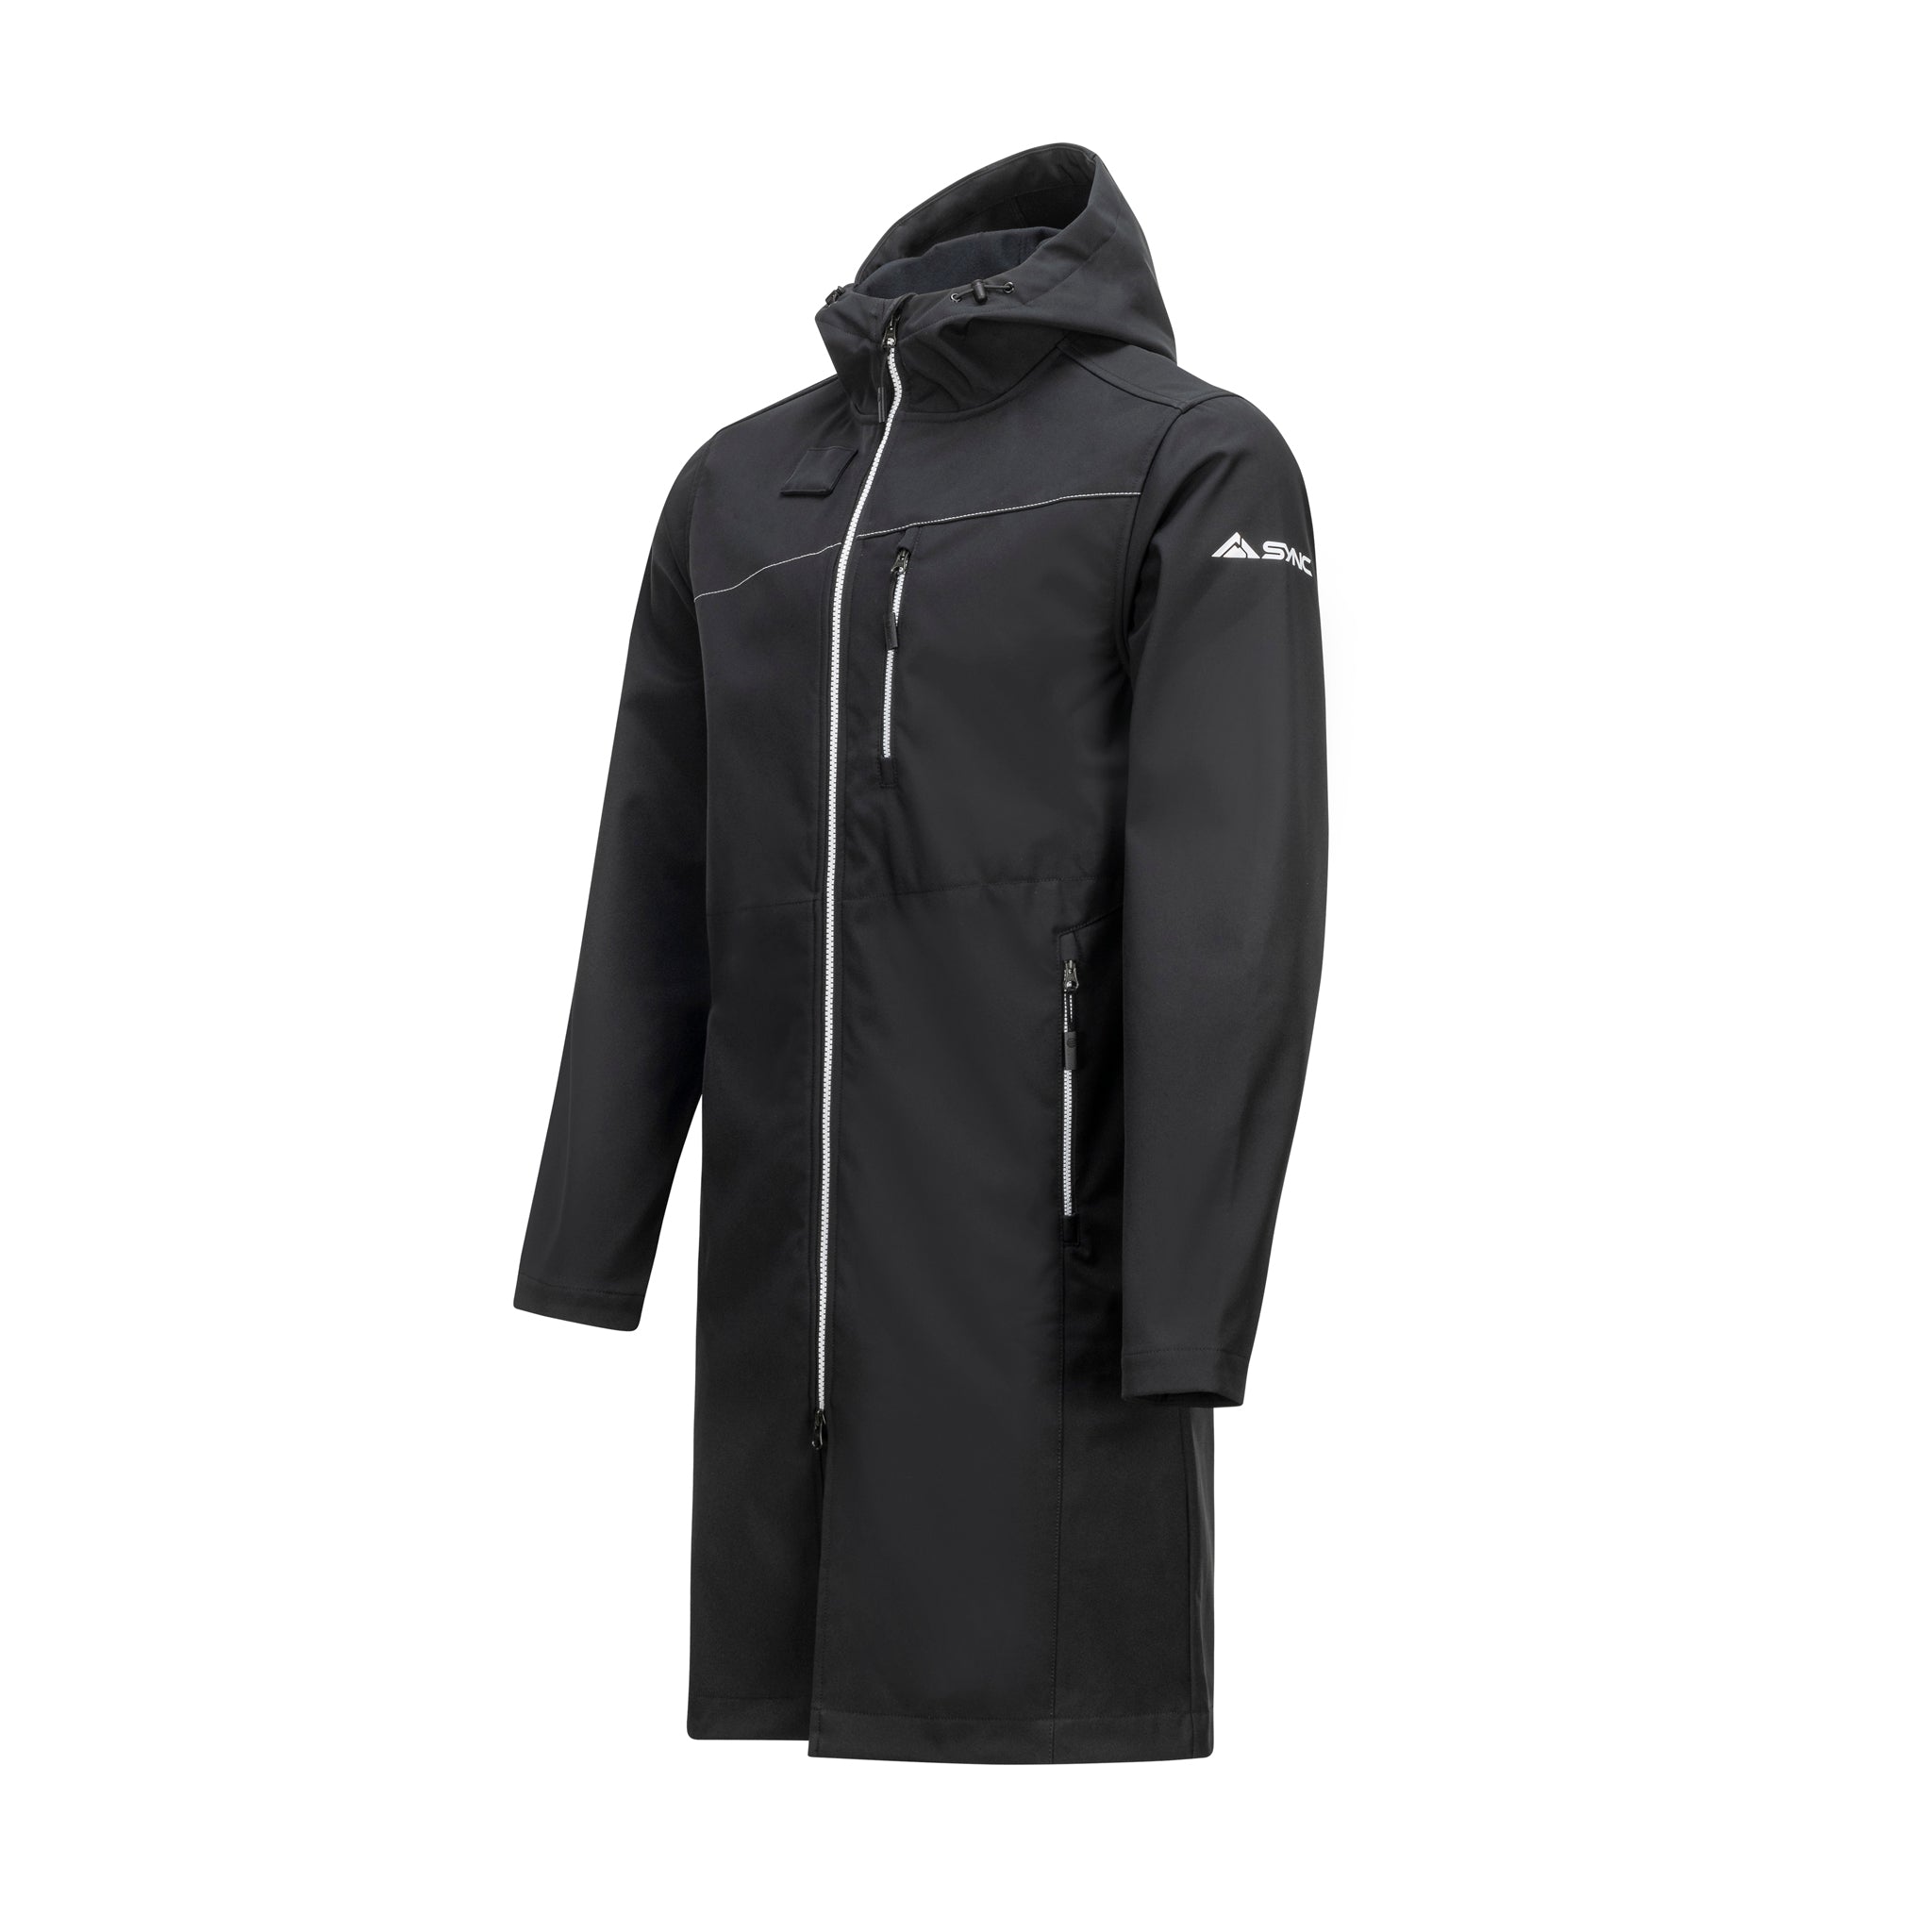 Buy Black Hooded Shower Resistant Jacket from Next France